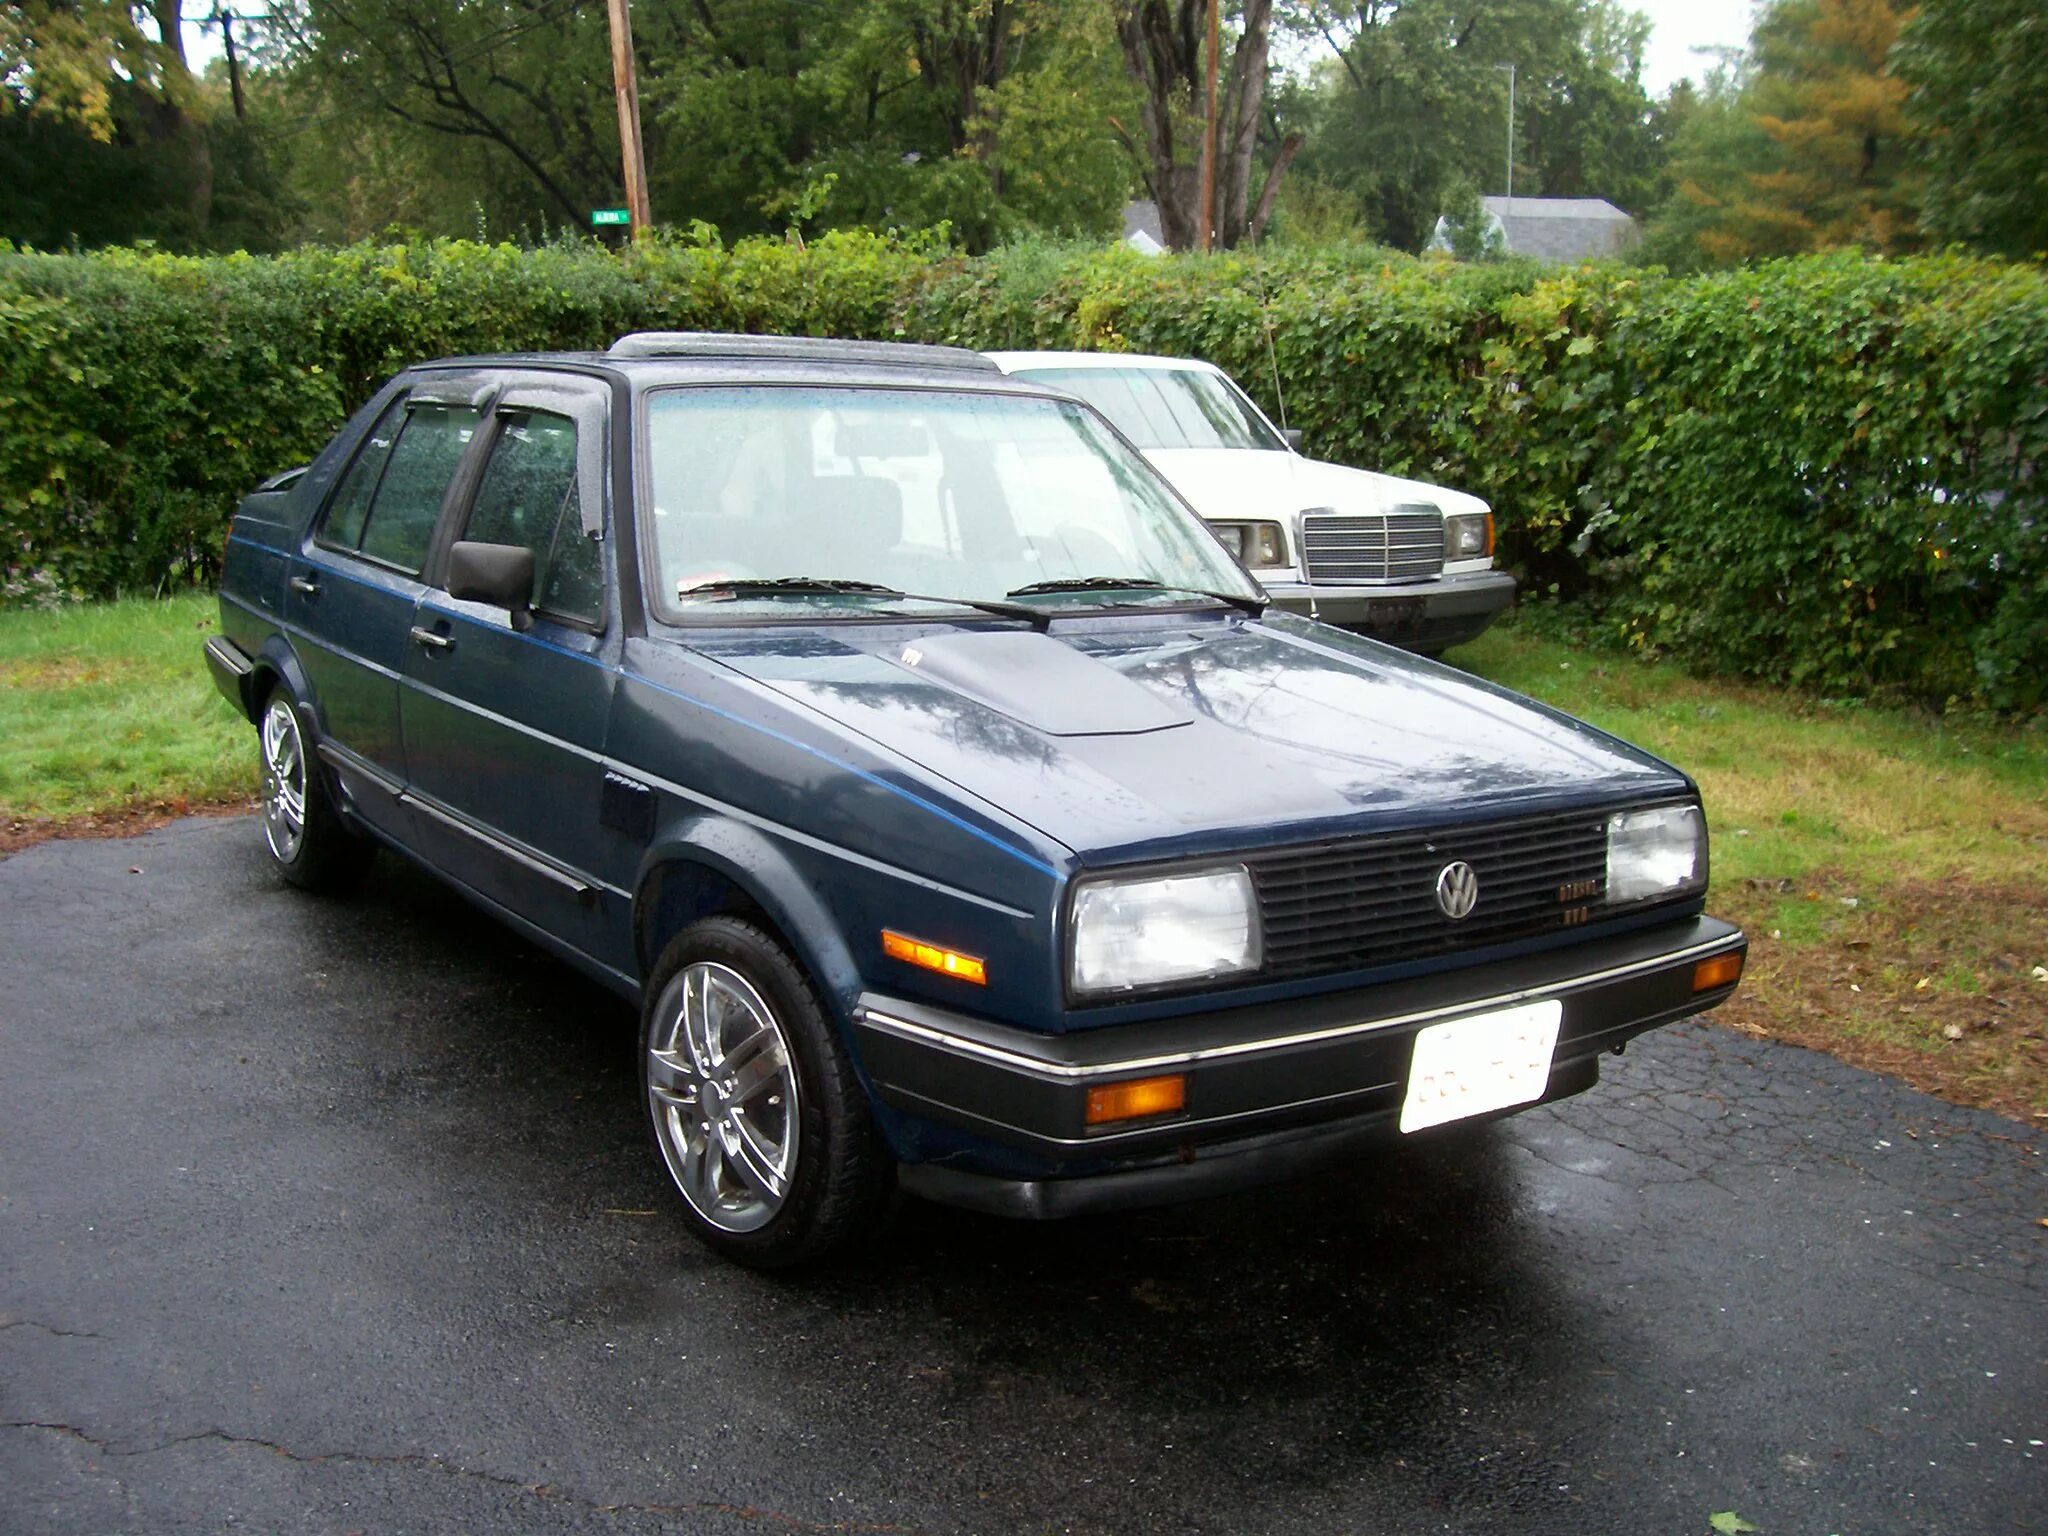 VW Jetta 1986. Фольксваген Джетта 1986г. Фольксваген Джетта 87. Фольксваген Джетта 1986 года. Джетта 1986